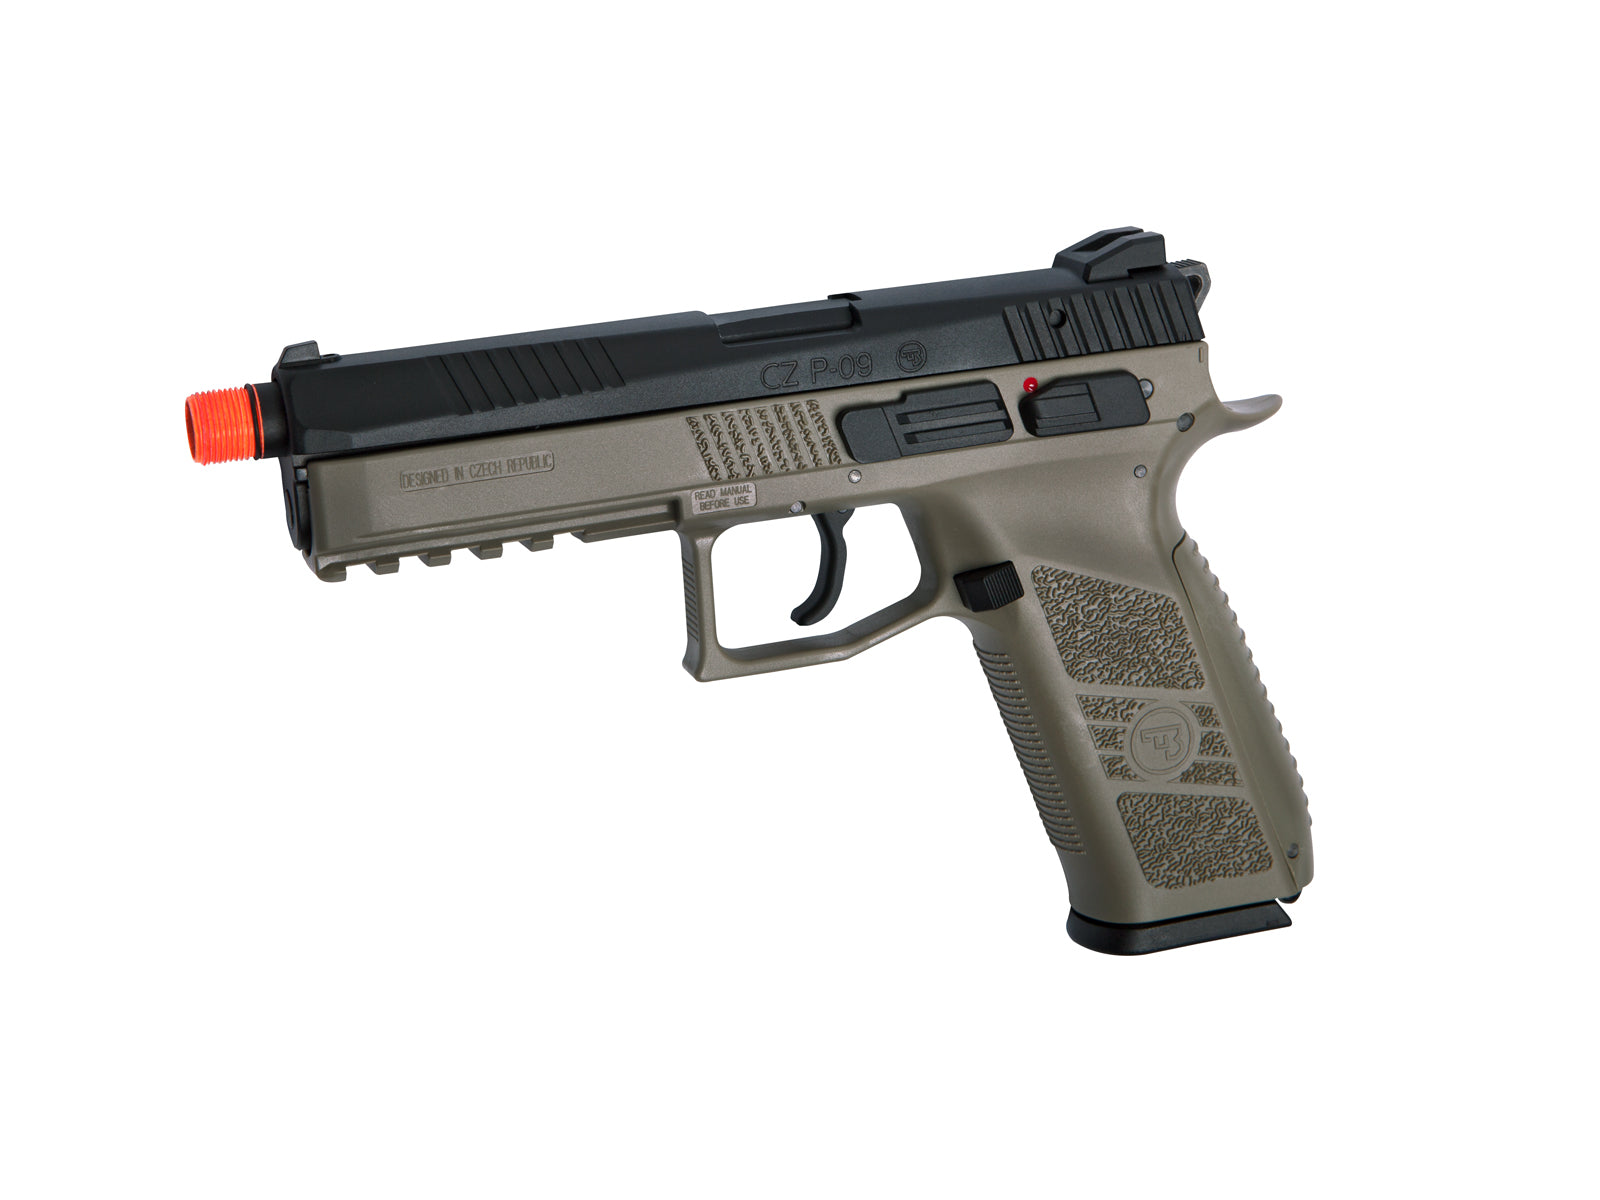 Umarex Smith & Wesson M&P9L Performance Center CO2 Airsoft Pistol